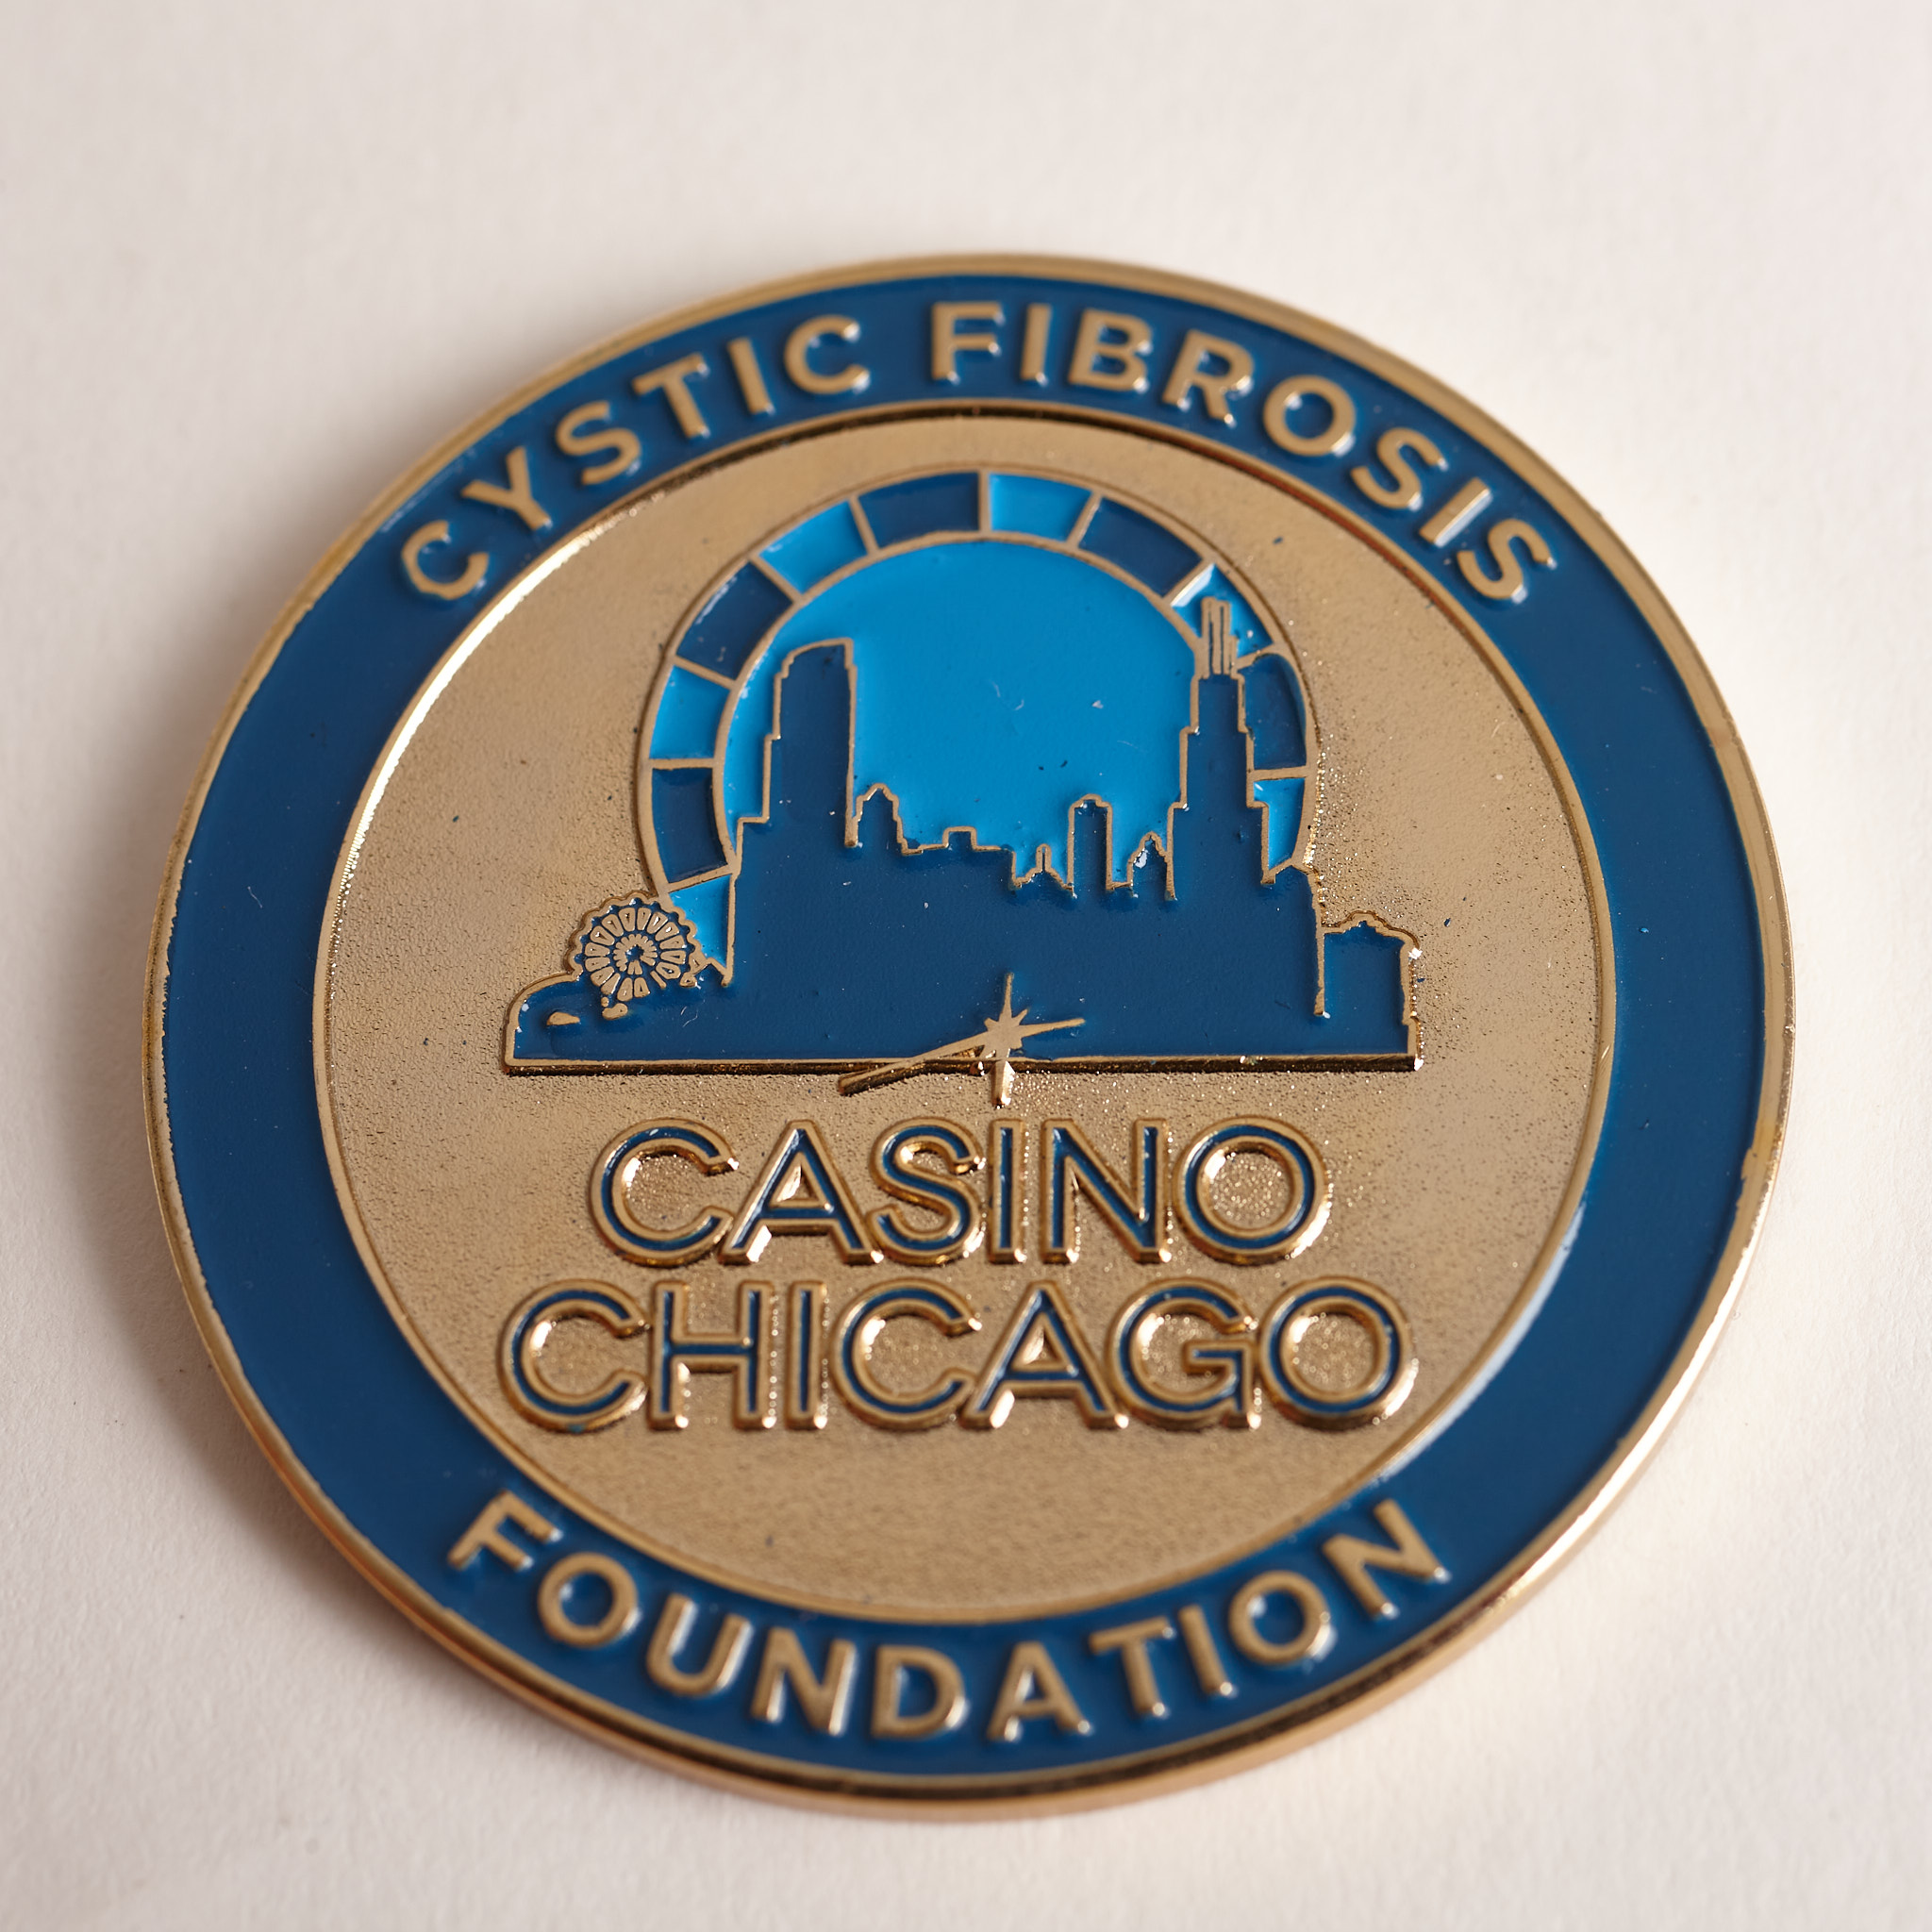 CASINO CHICAGO, CYSTIC FIBROSIS FOUNDATION (CHARITY), BTIG,  Poker Card Guard